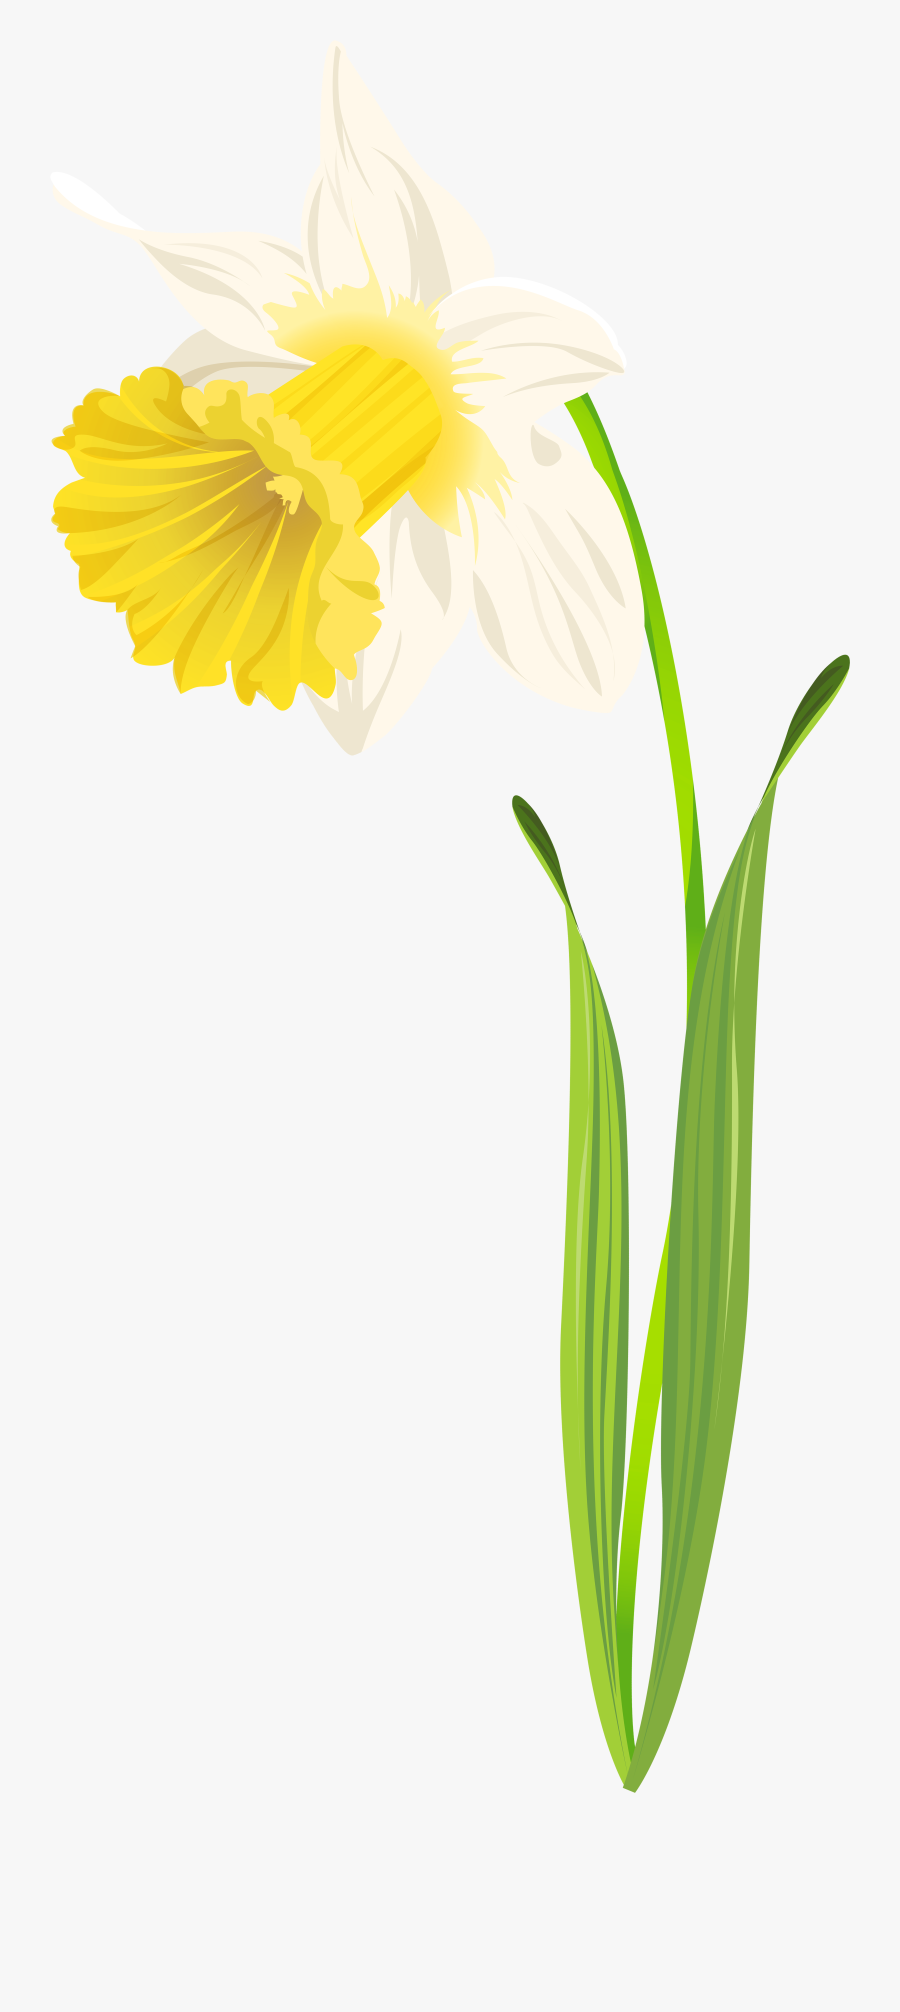 Daffodil Png Clip Art Image - Daffodil Leaf Png, Transparent Clipart